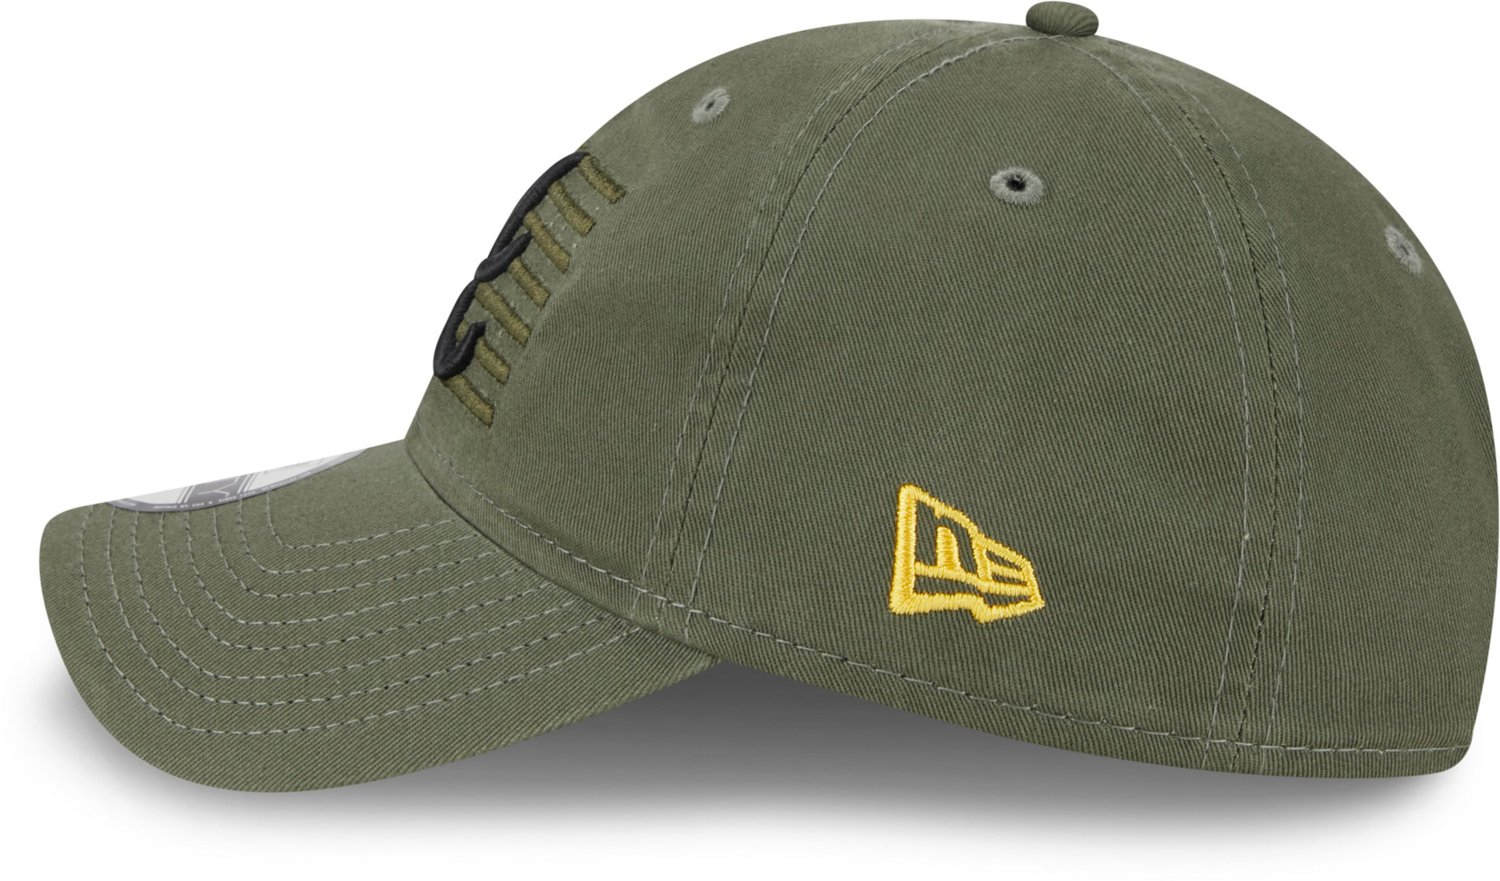  New Era MLB Armed Forces Day 9TWENTY Adjustable Hat - Camo  (Arizona Diamondbacks) : Sports & Outdoors